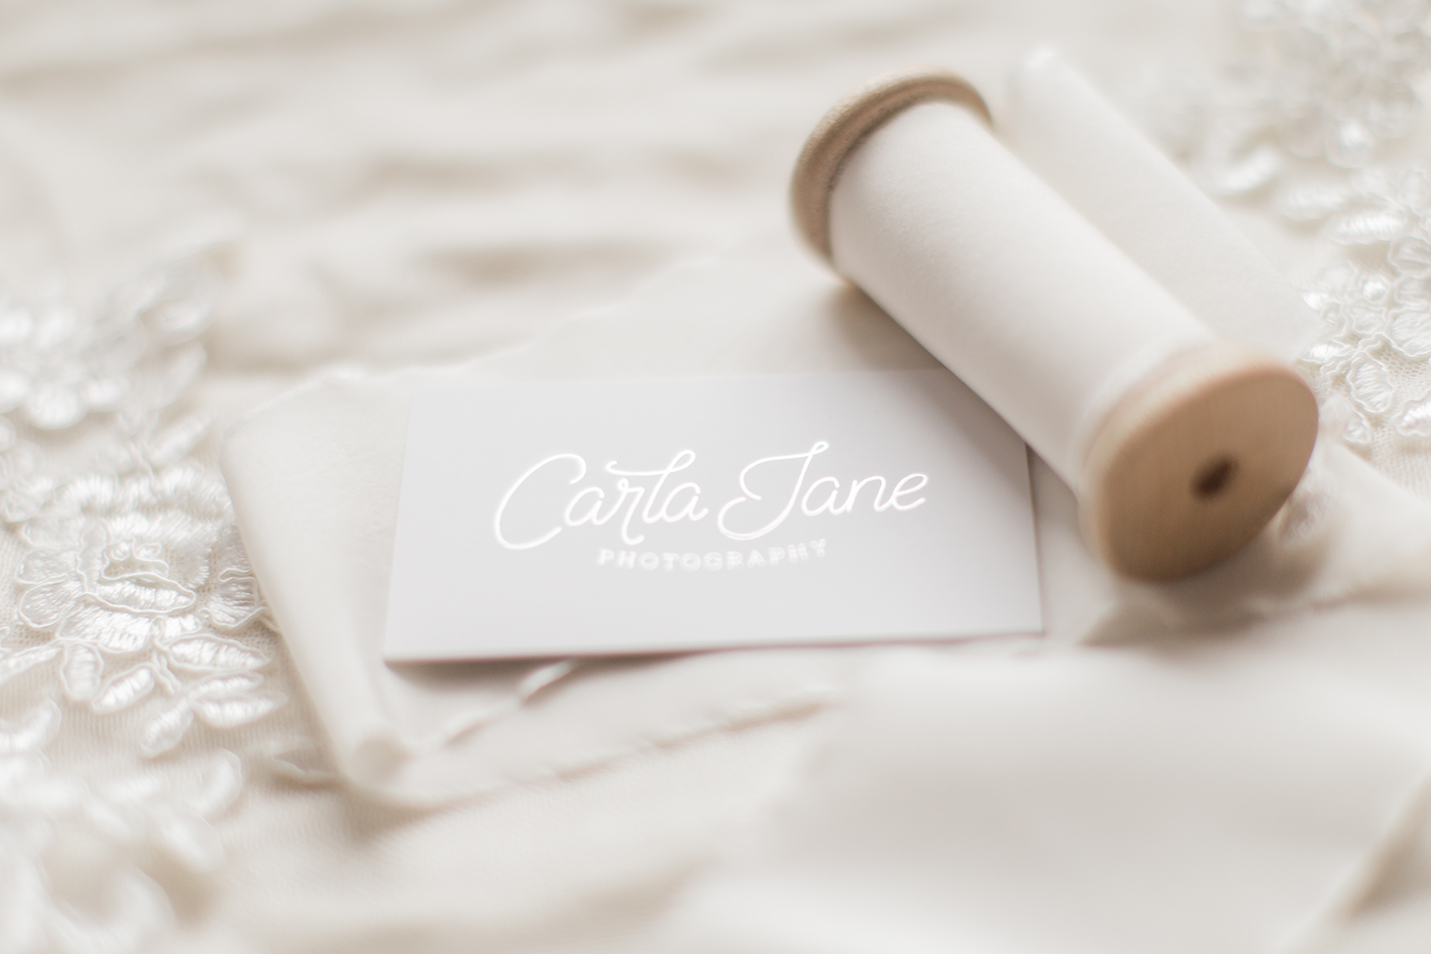 Carla Jane Photography | Hand Lettered Branding | Nashville Wedding Photographer